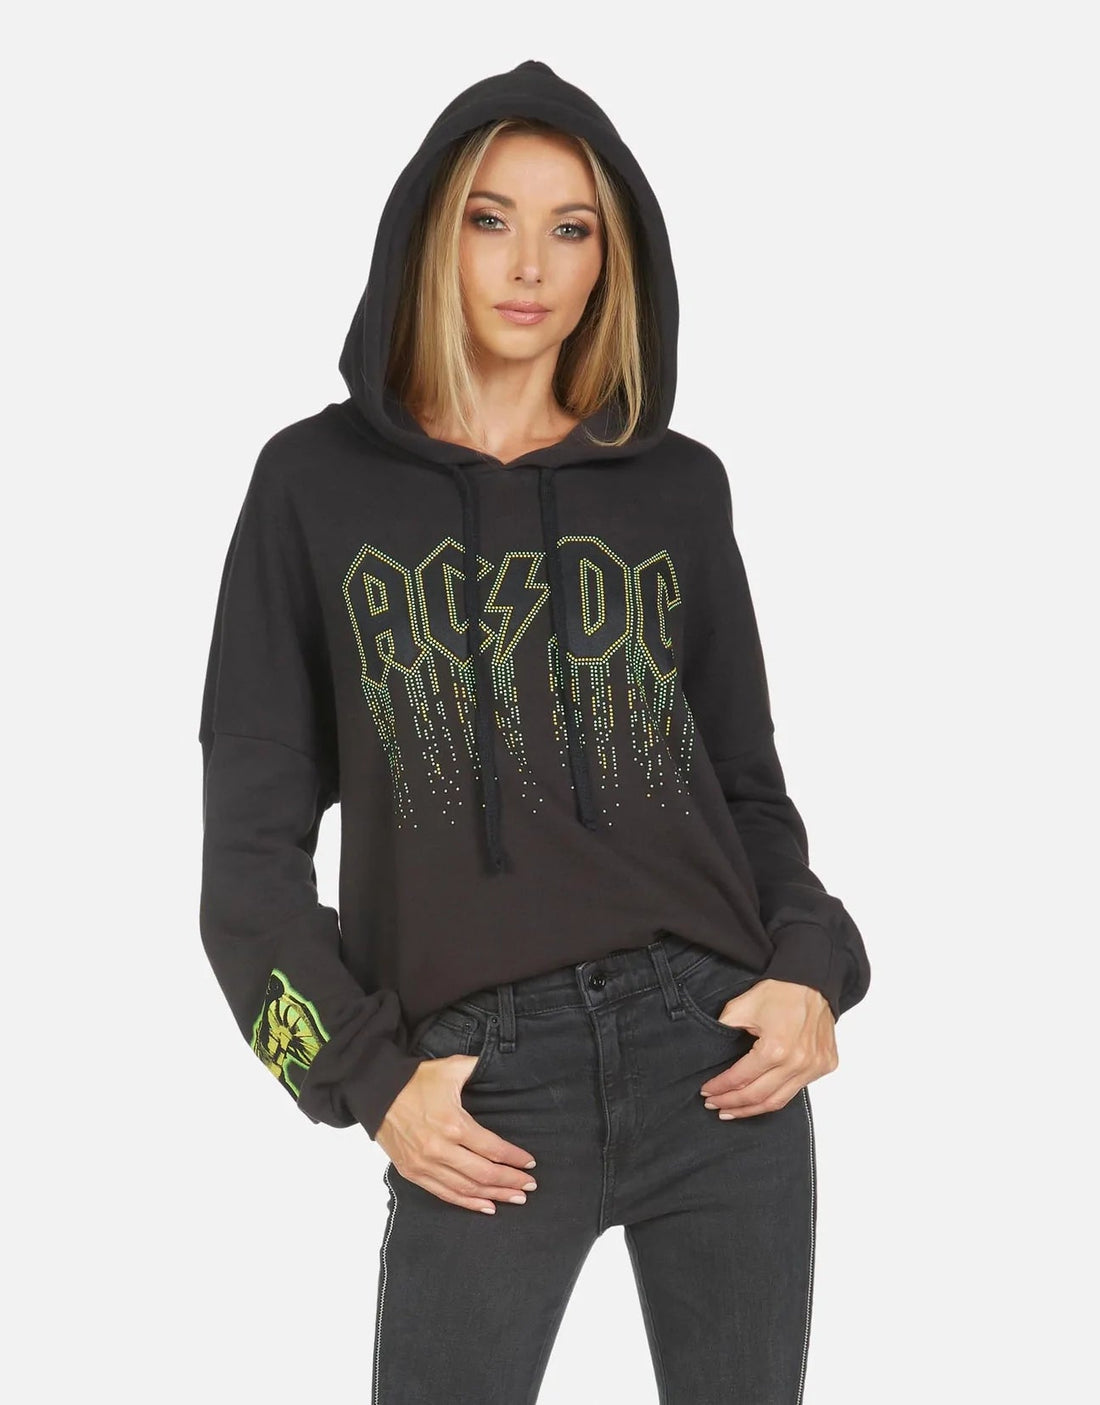 Shop Lauren Moshi Lila AC/DC Neon Stud Hooded Pullover - Premium Pullover from Lauren Moshi Online now at Spoiled Brat 